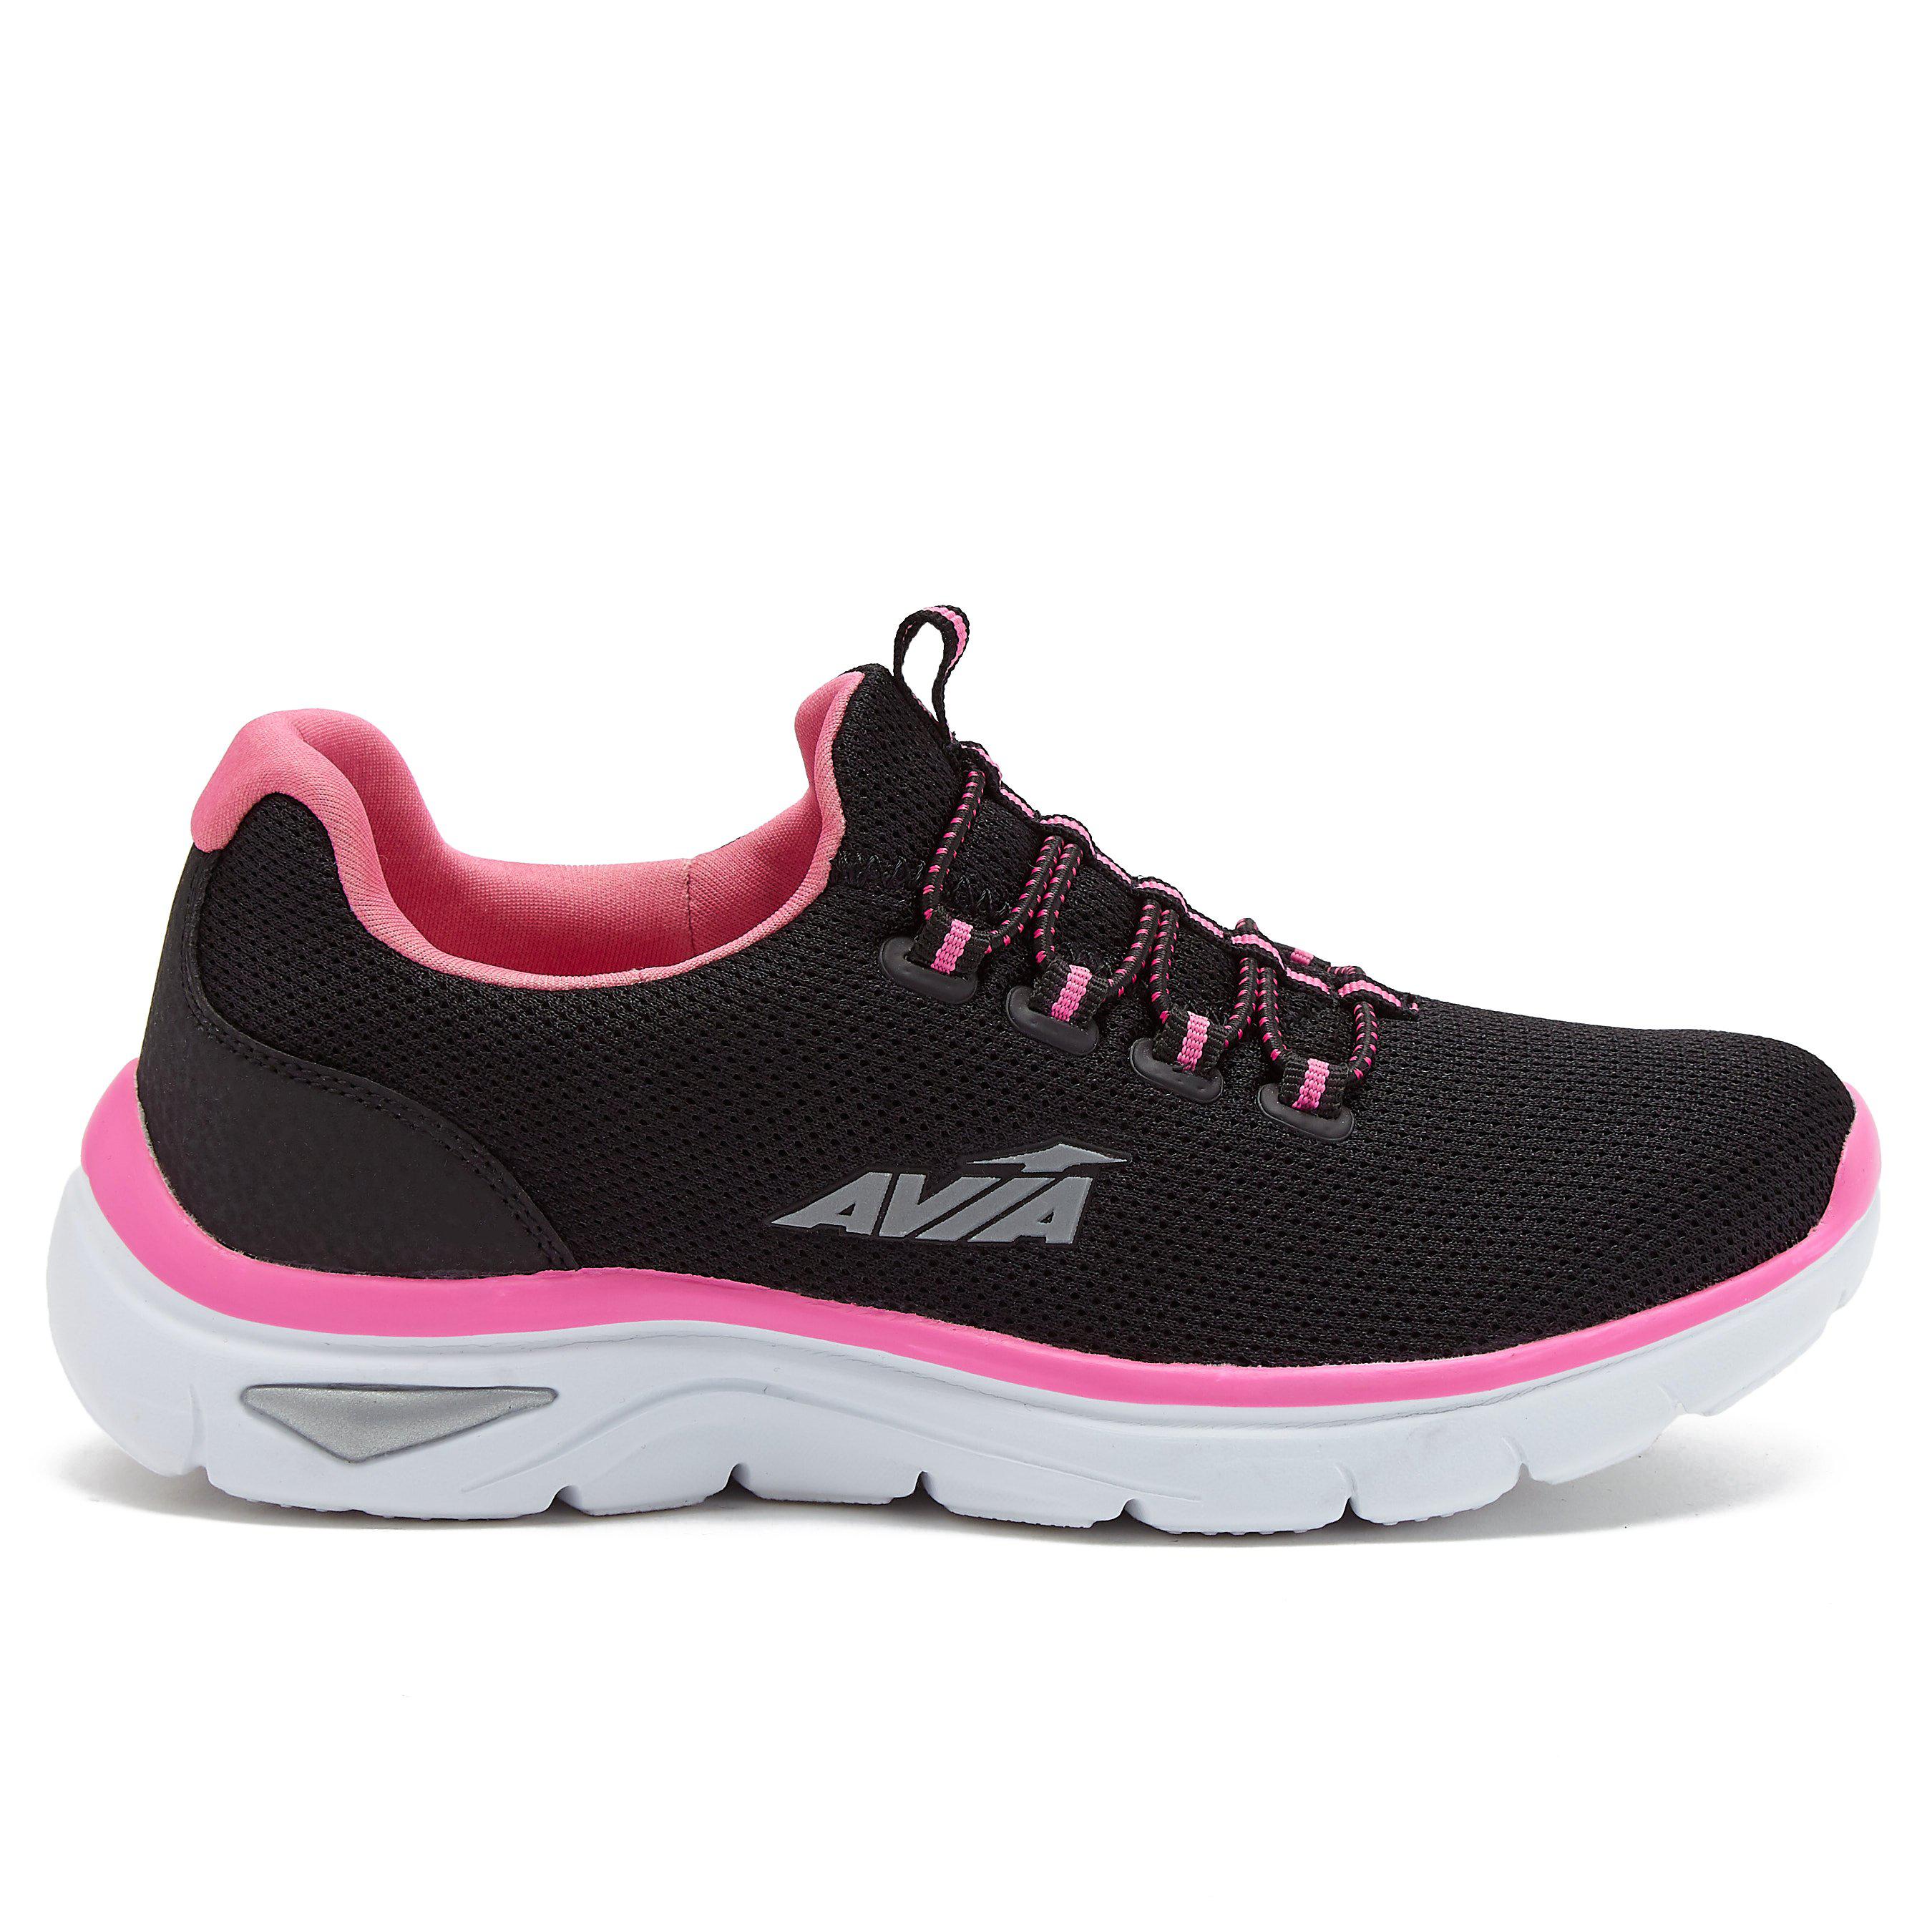 Avia Pink Shoes Women Size 6 New KK